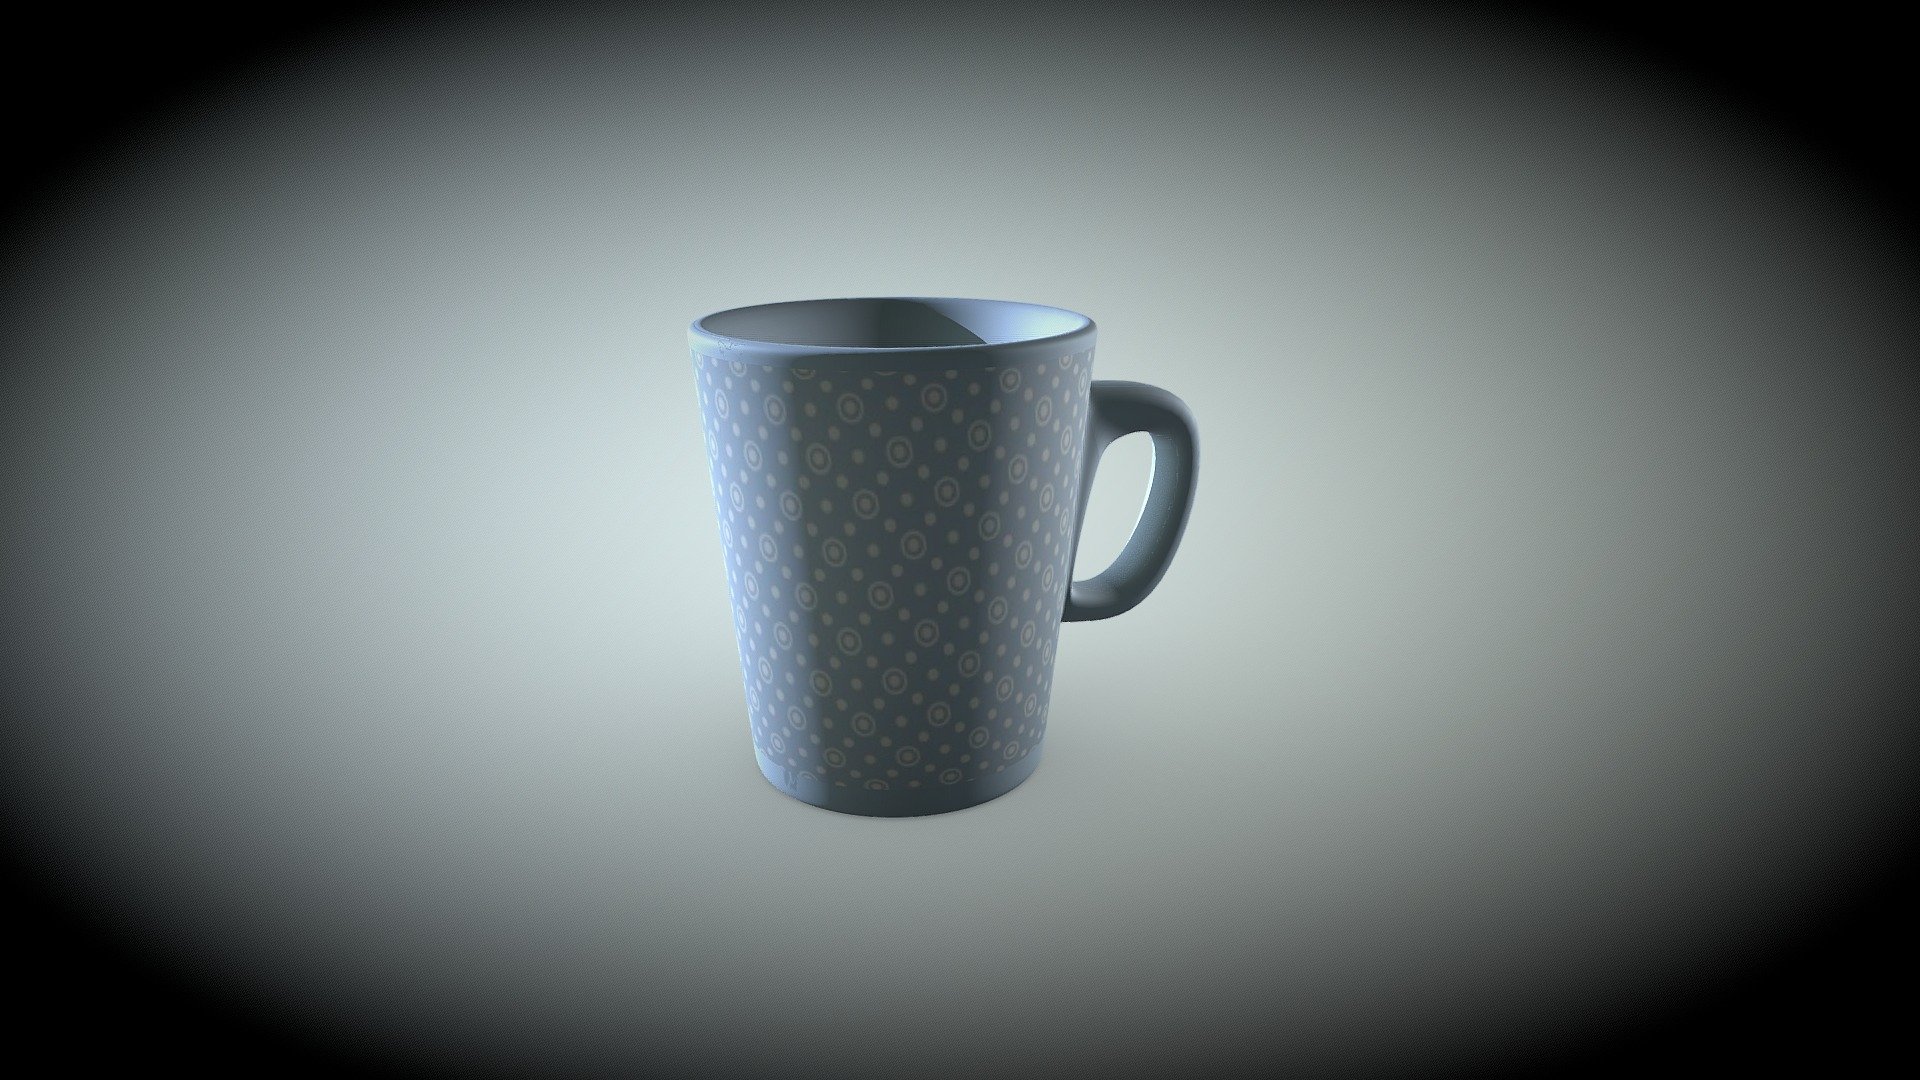 Coffee Mug 3D Model